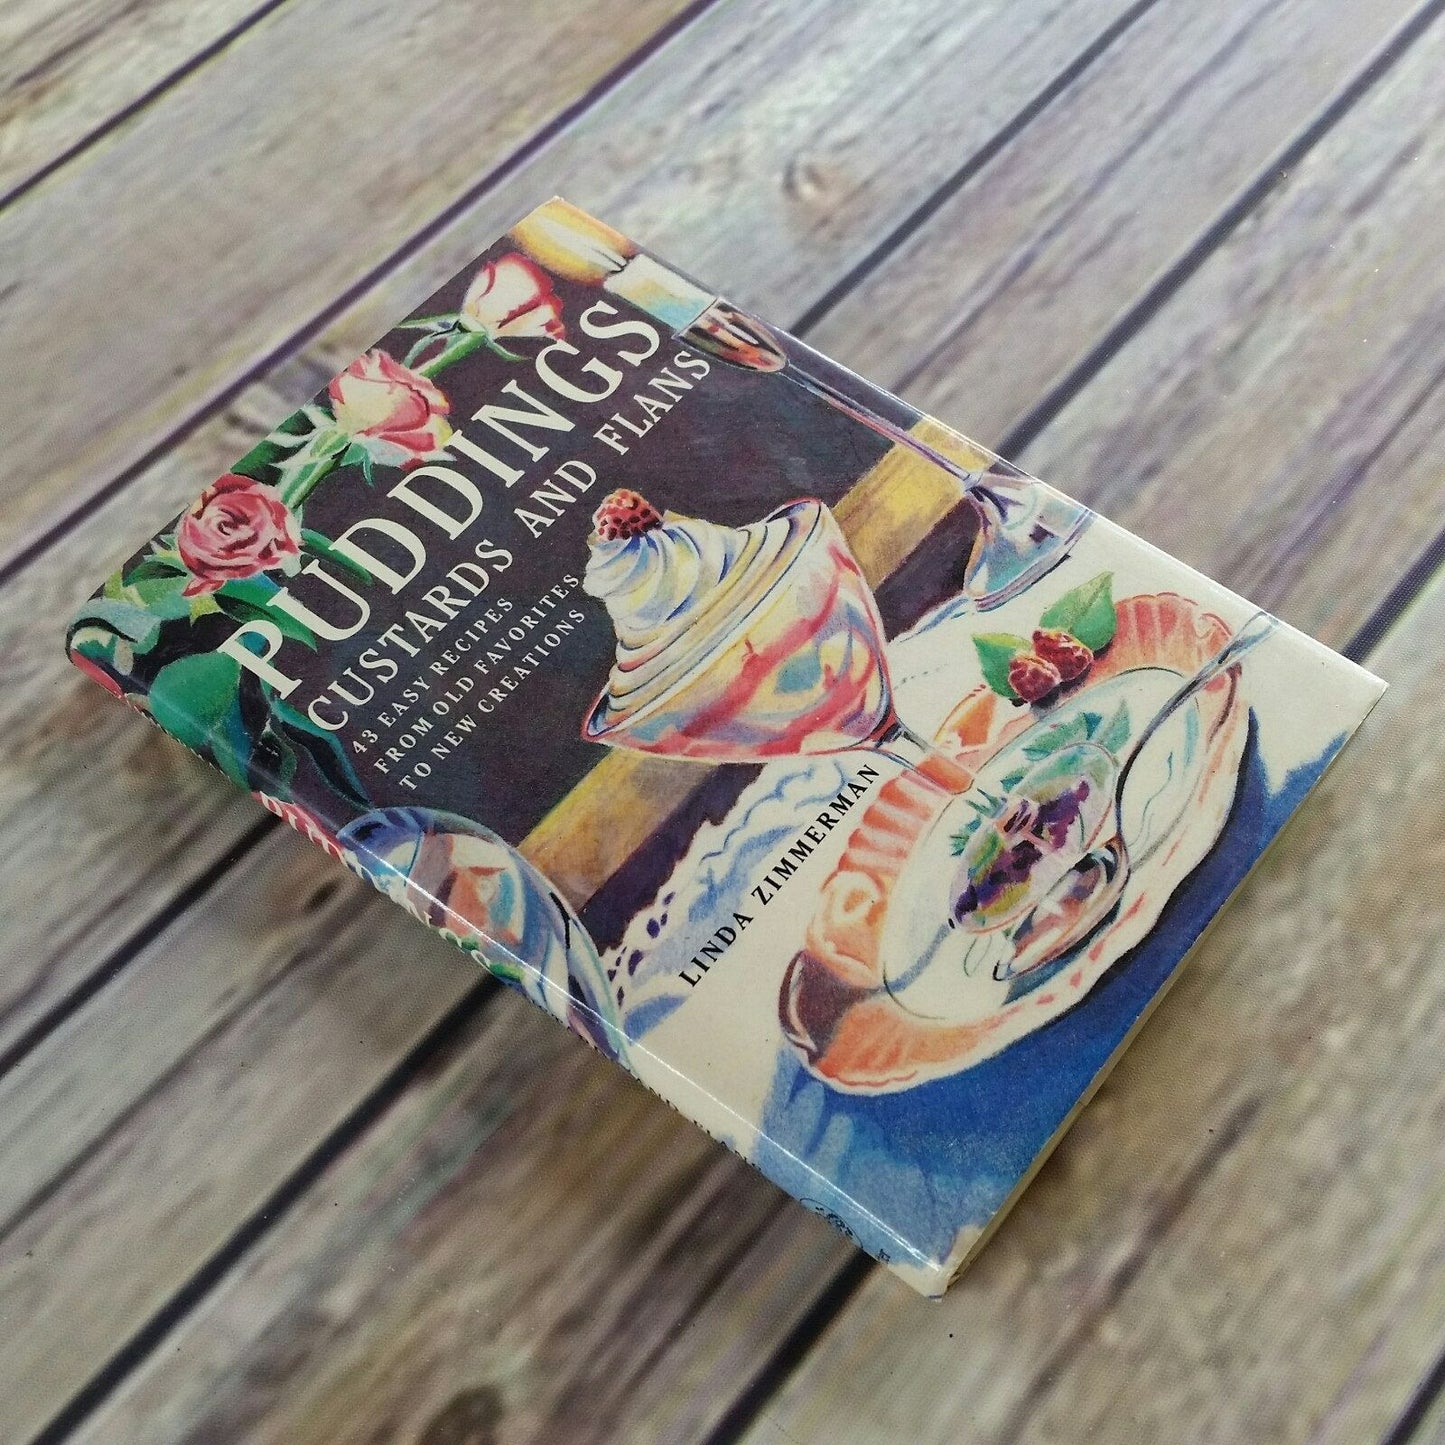 Vintage Cookbook Puddings Custards and Flans Recipes 1990 Linda Zimmerman Hardcover Dust Jacket